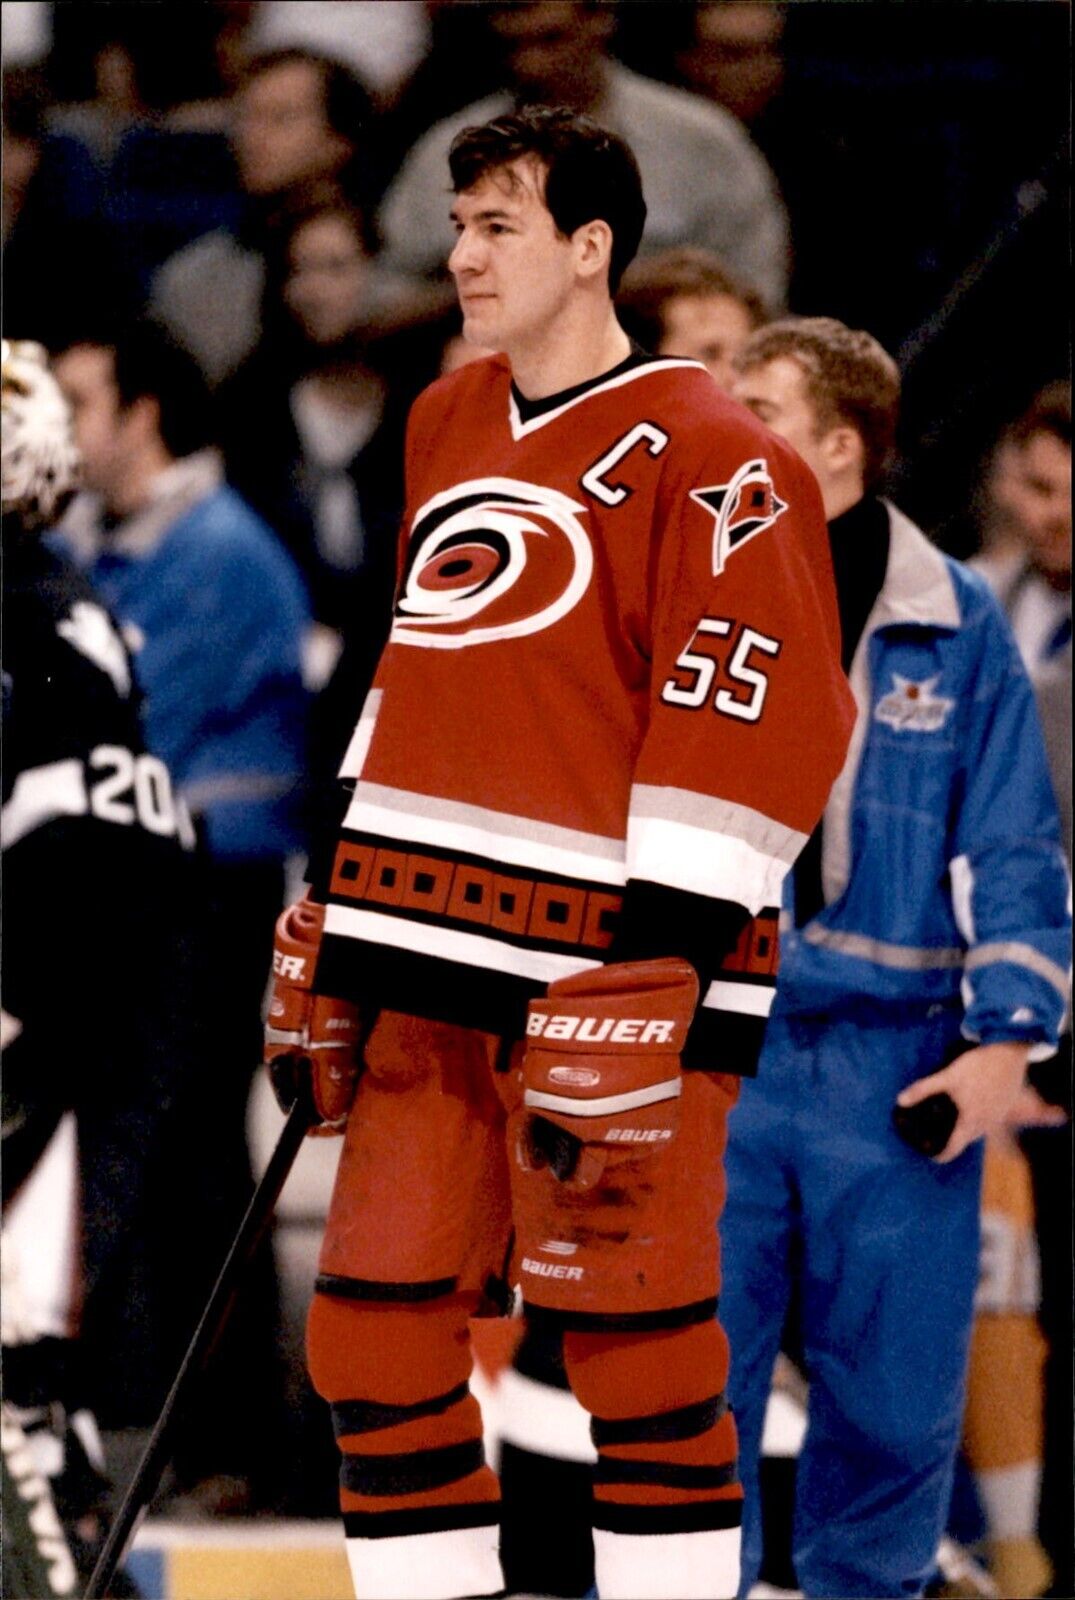 PF23 1999 Orig Photo CAROLINA HURRICANES KEITH PRIMEAU NHL HOCKEY ALL-STAR GAME